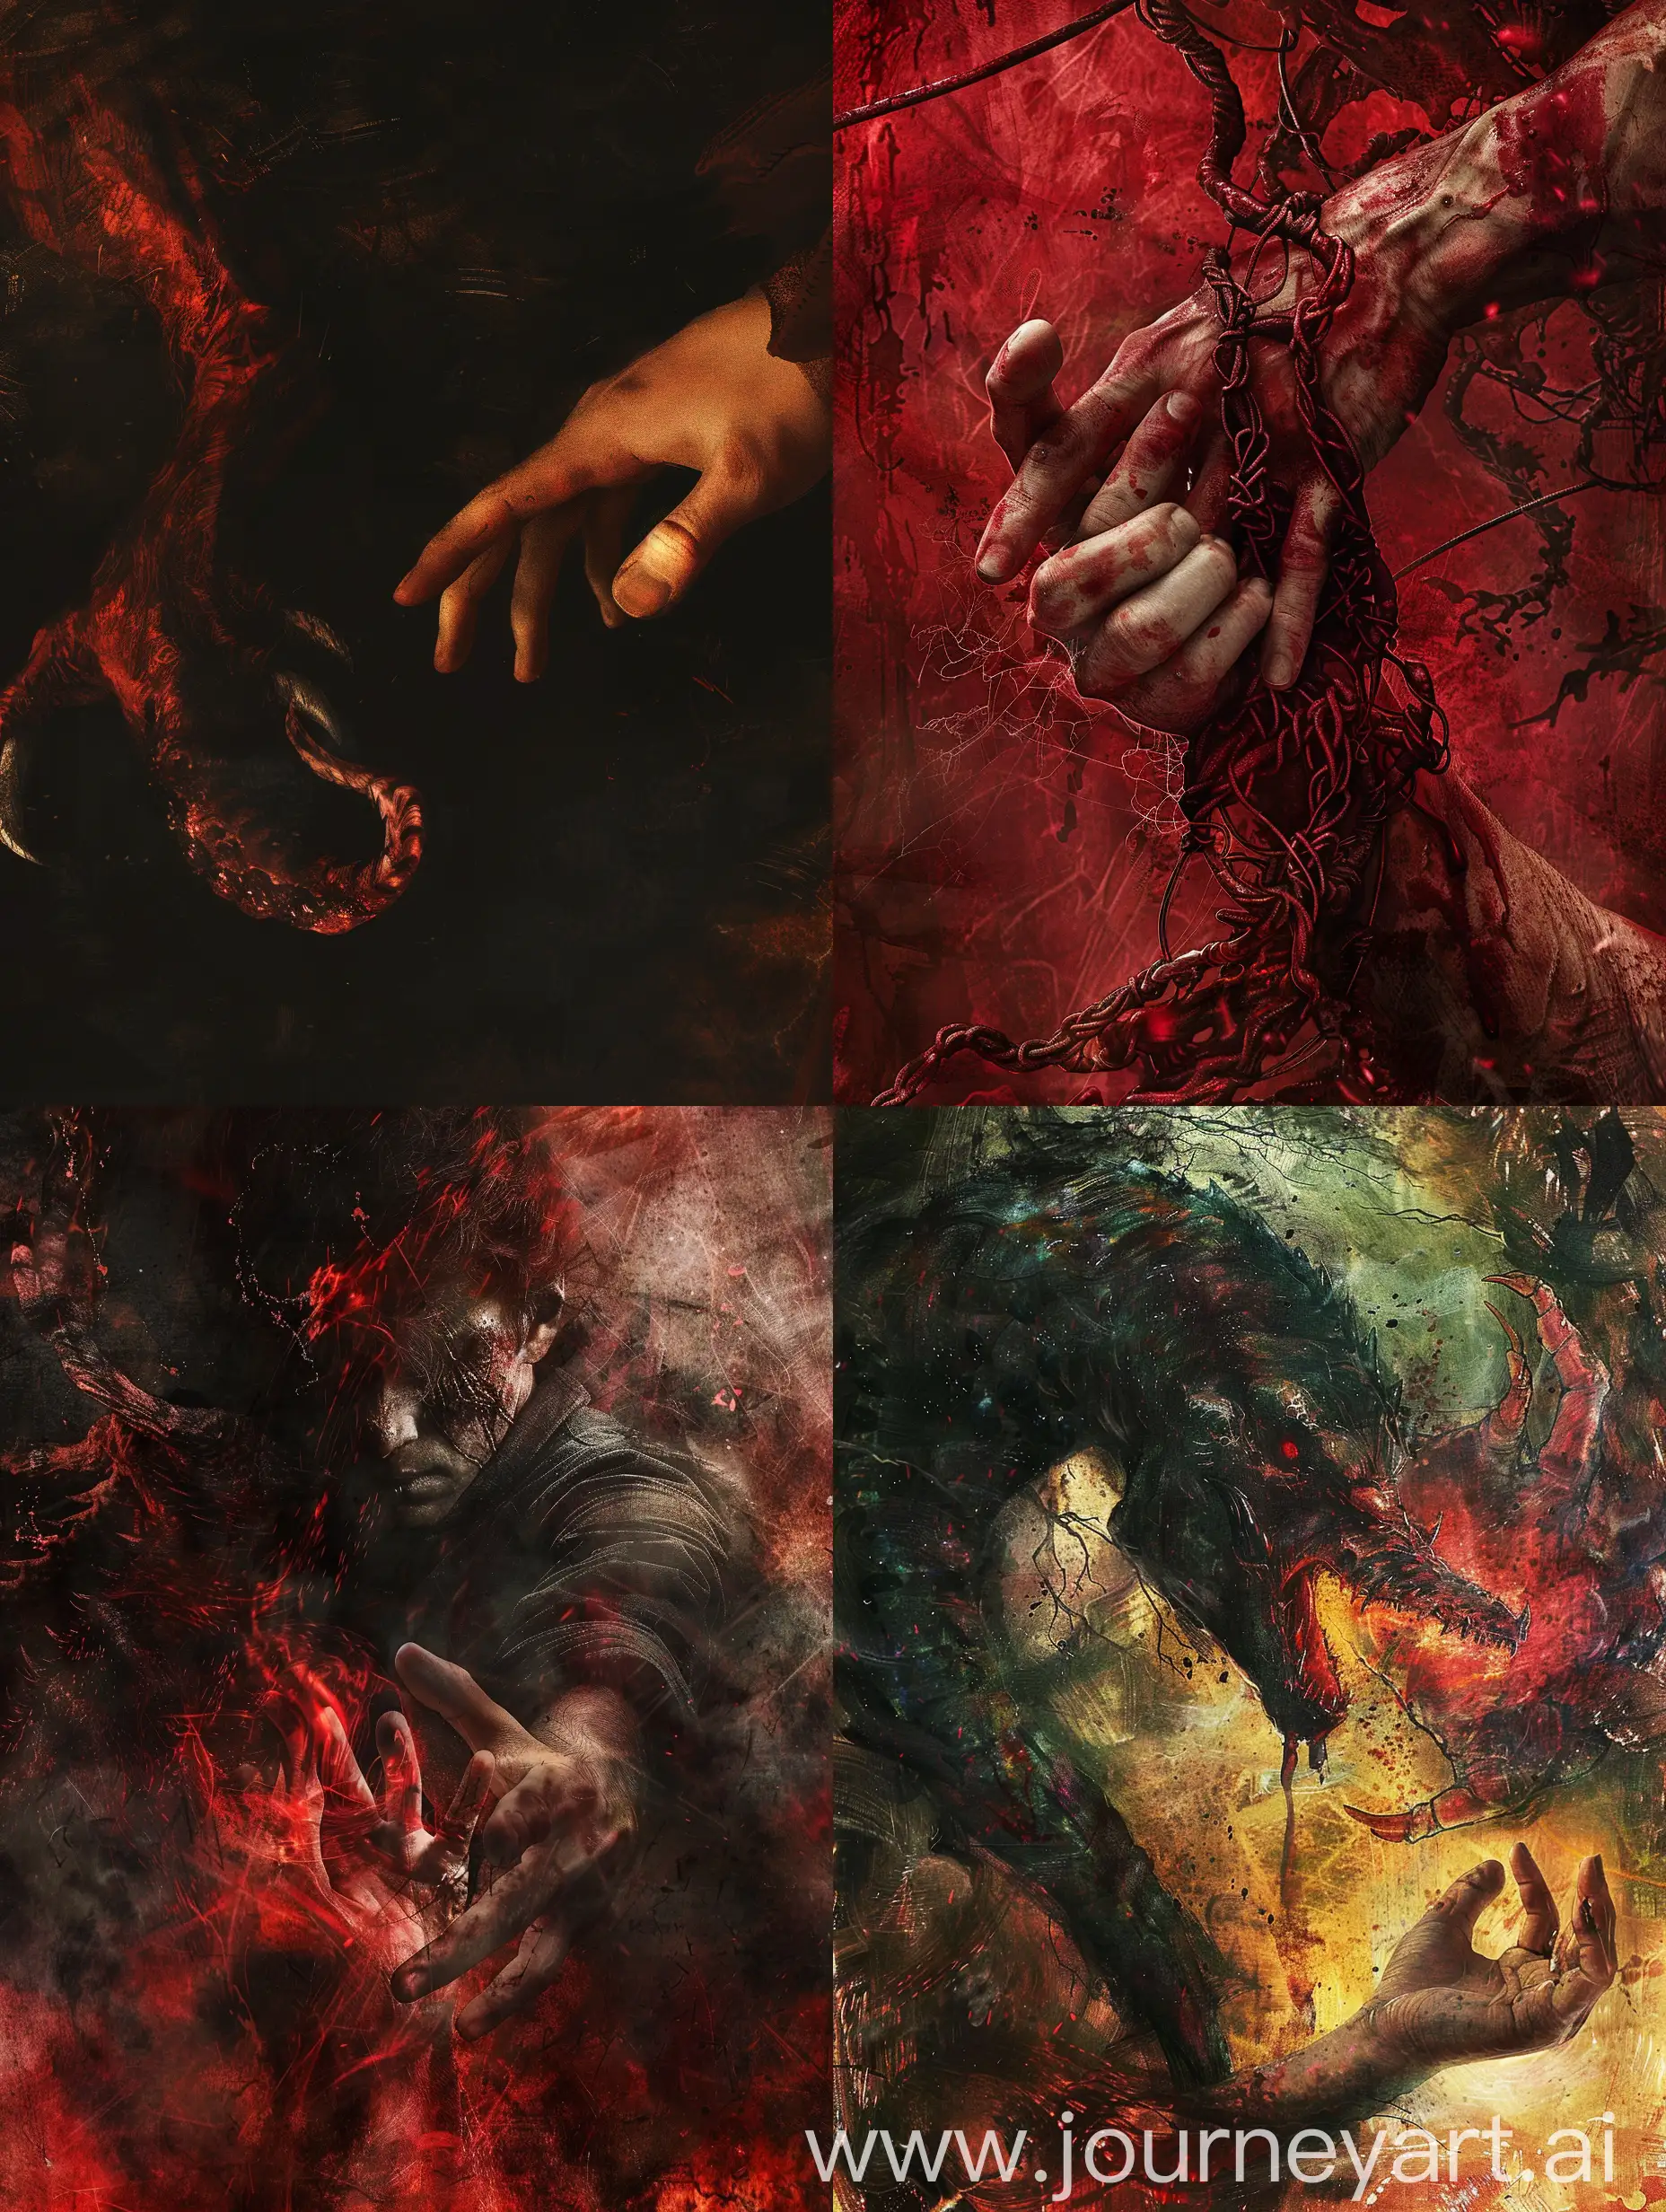 Demon-Dragging-Human-into-Hell-Dark-and-Surreal-Artwork